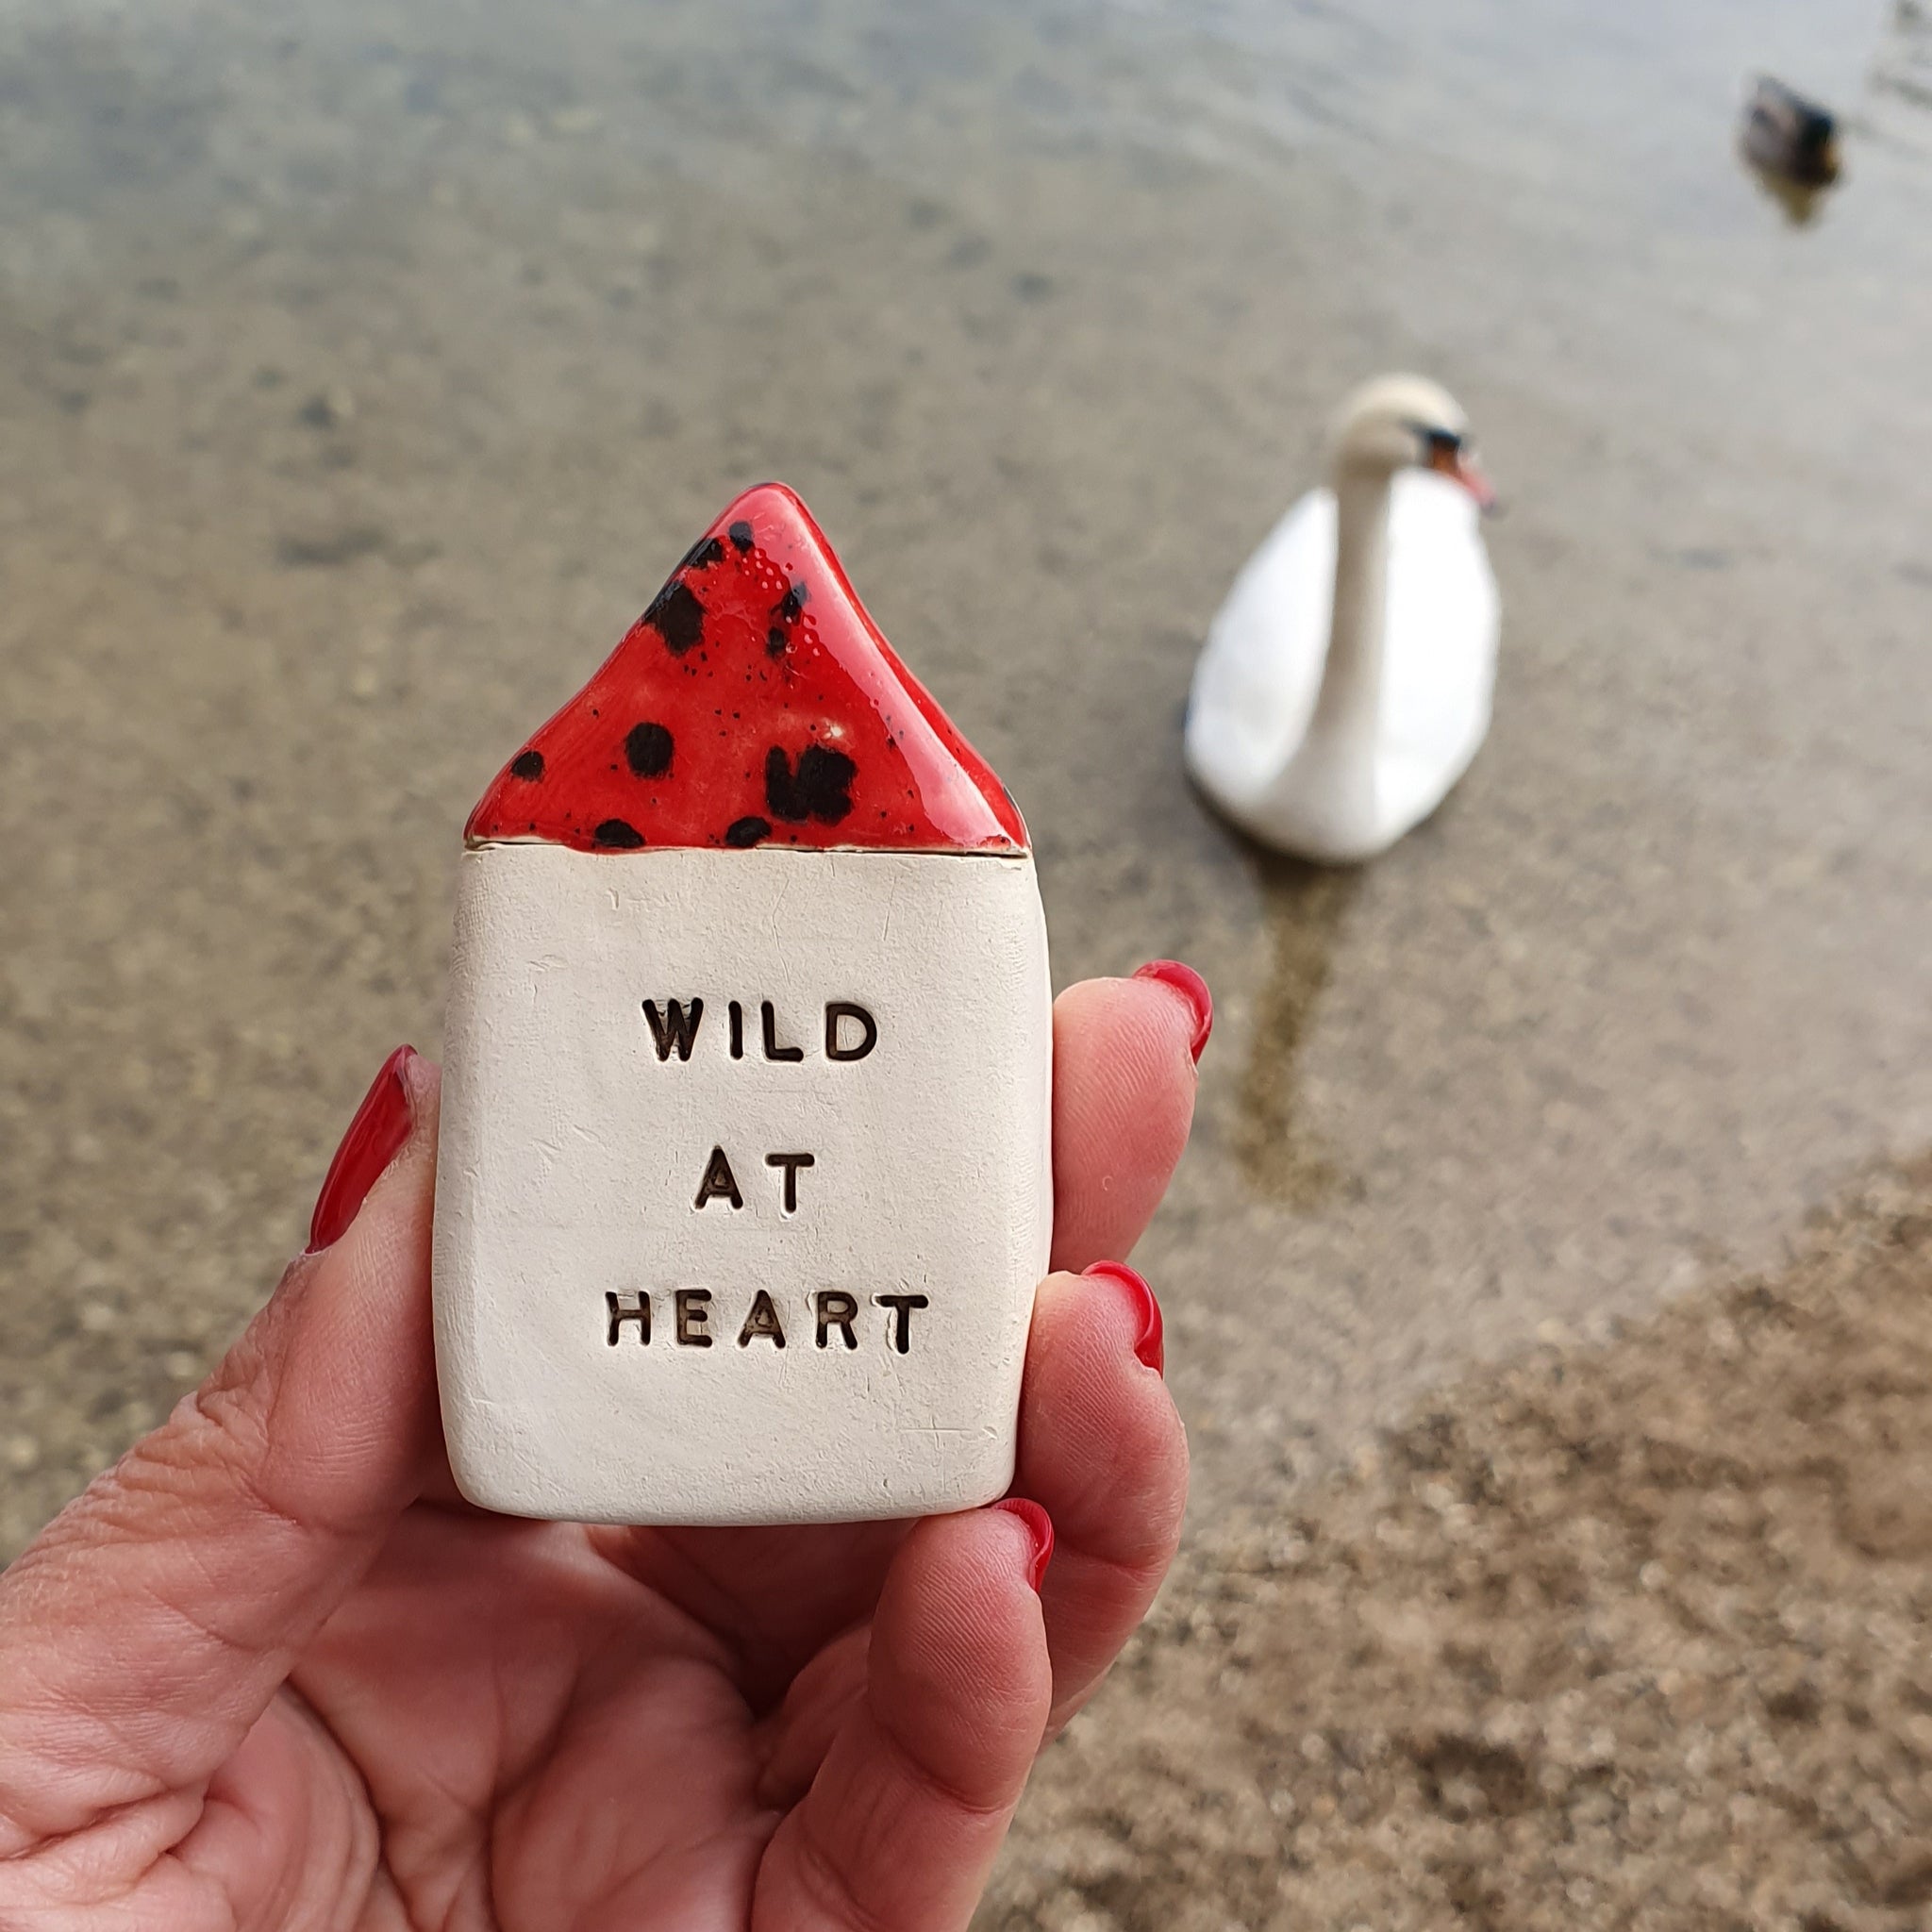 Wild at heart 